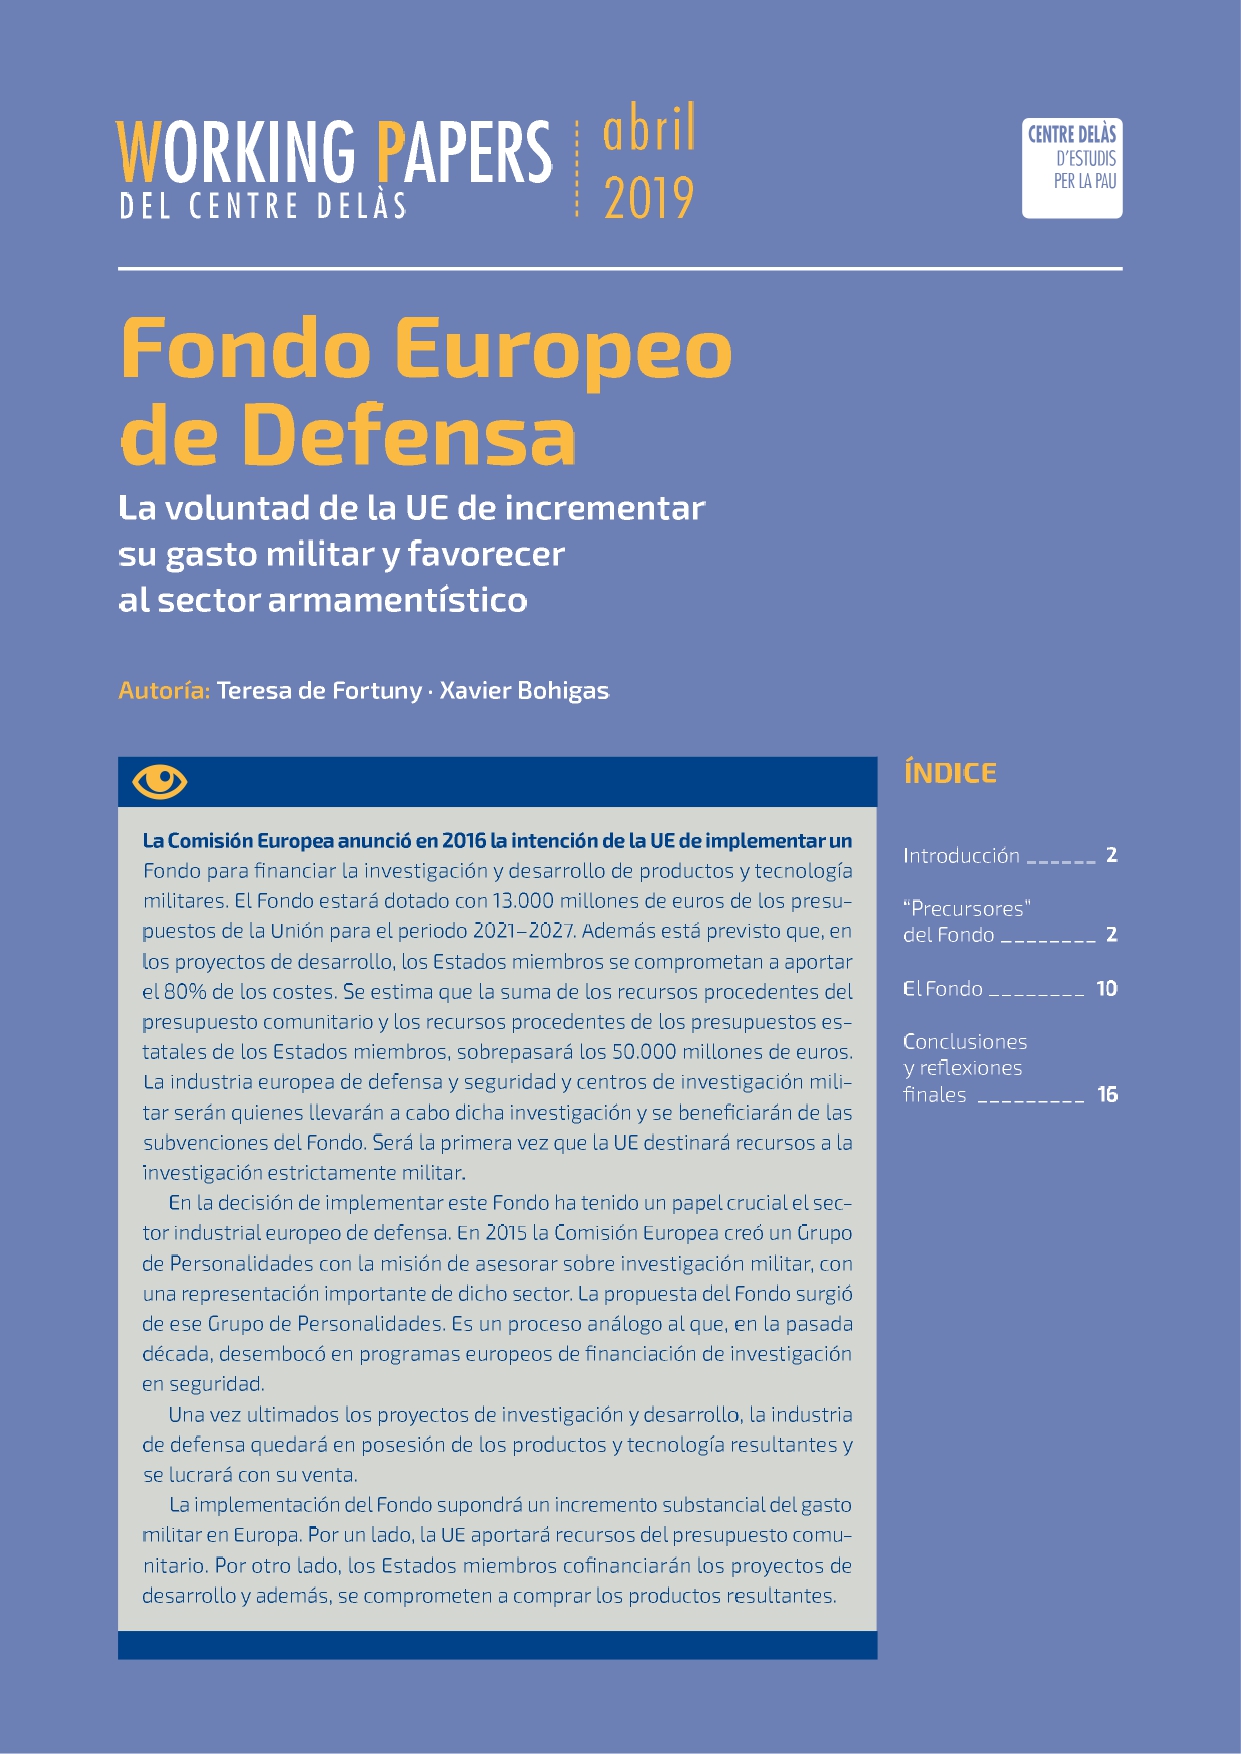 Working Paper: Fondo Europeo de Defensa